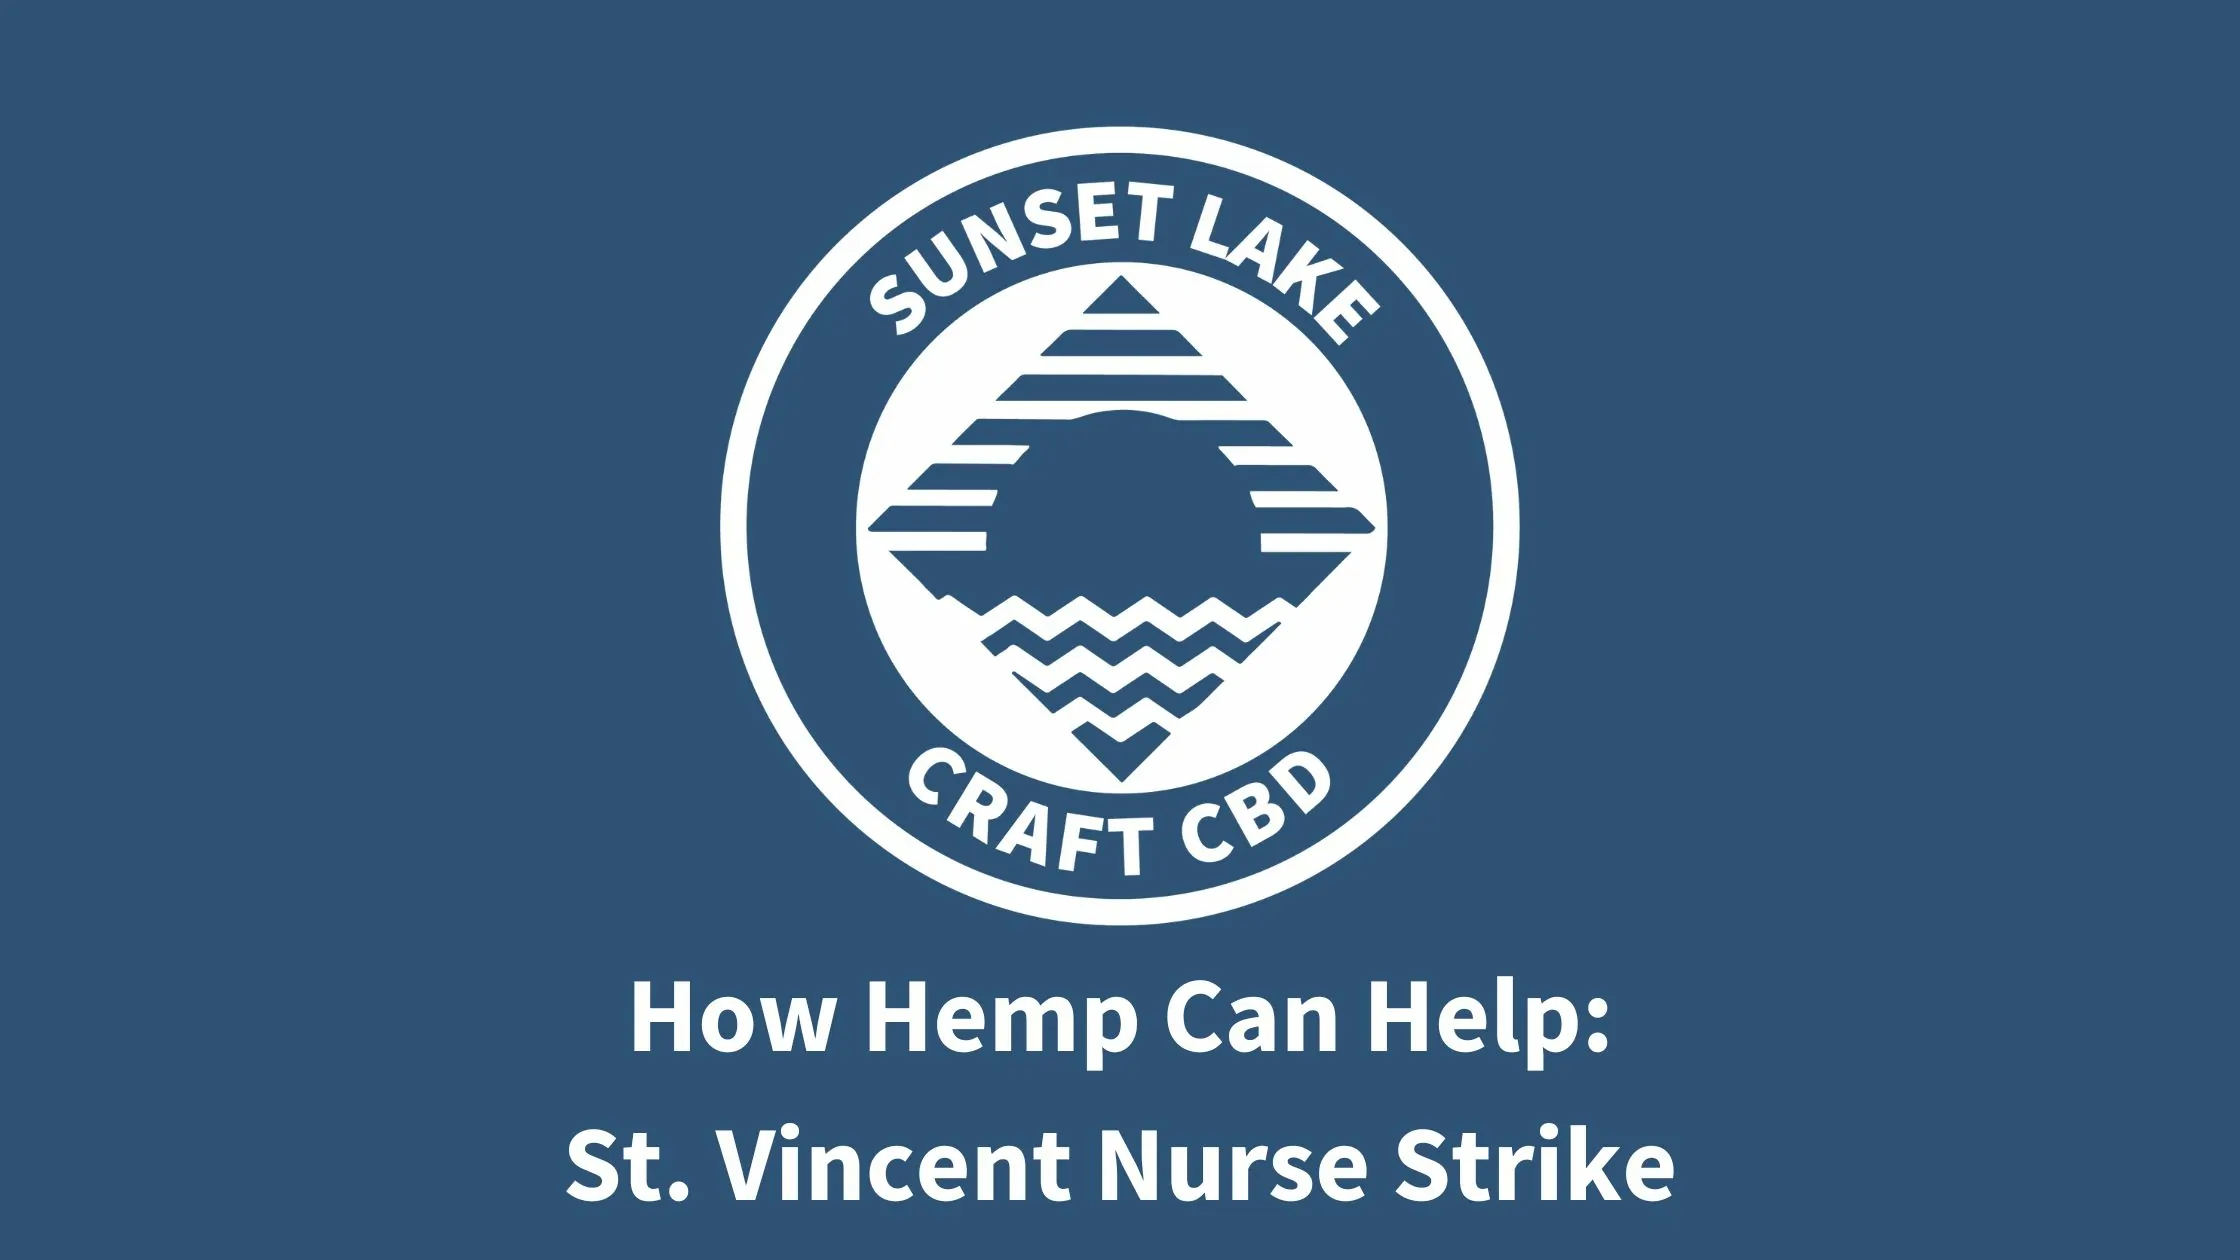 Sunset Lake CBD Logo on blue. Text reads "How Hemp Can Help: St. Vincent Nurse Strike"